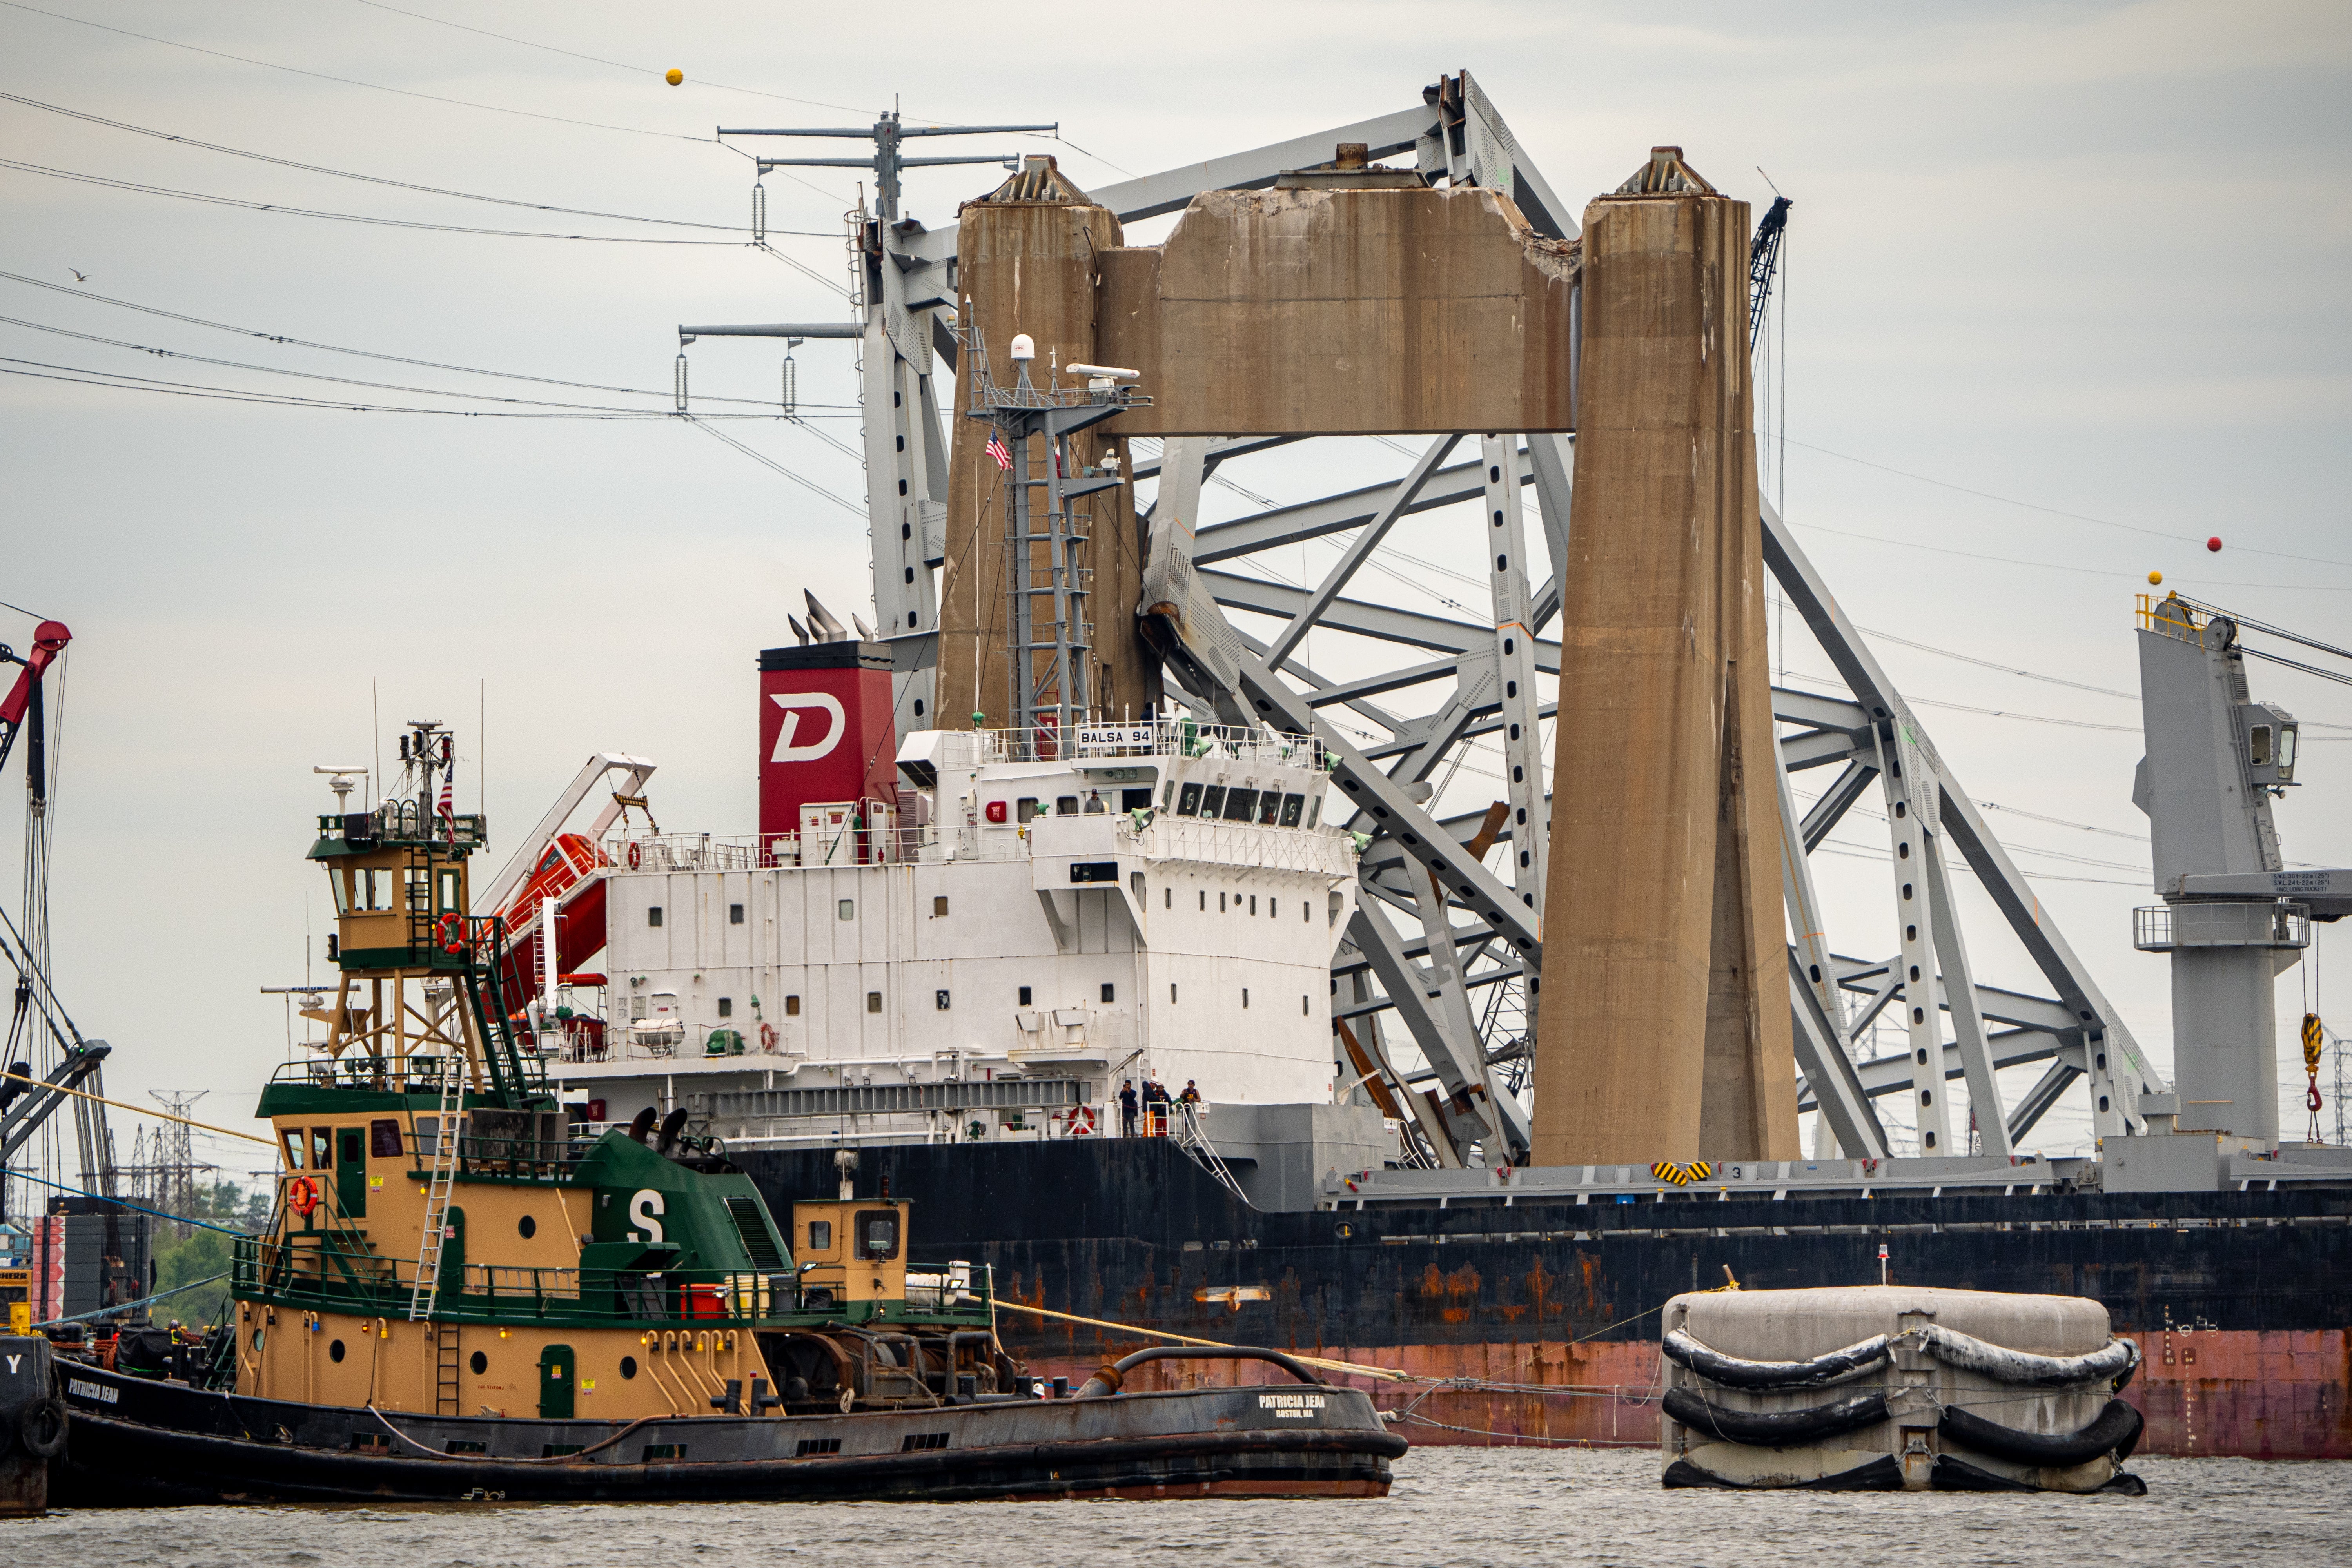 The Balsa 94, a bulk carrier cargo ship, sailing past the Francis Scott Key Bridge wreckage on Thursday